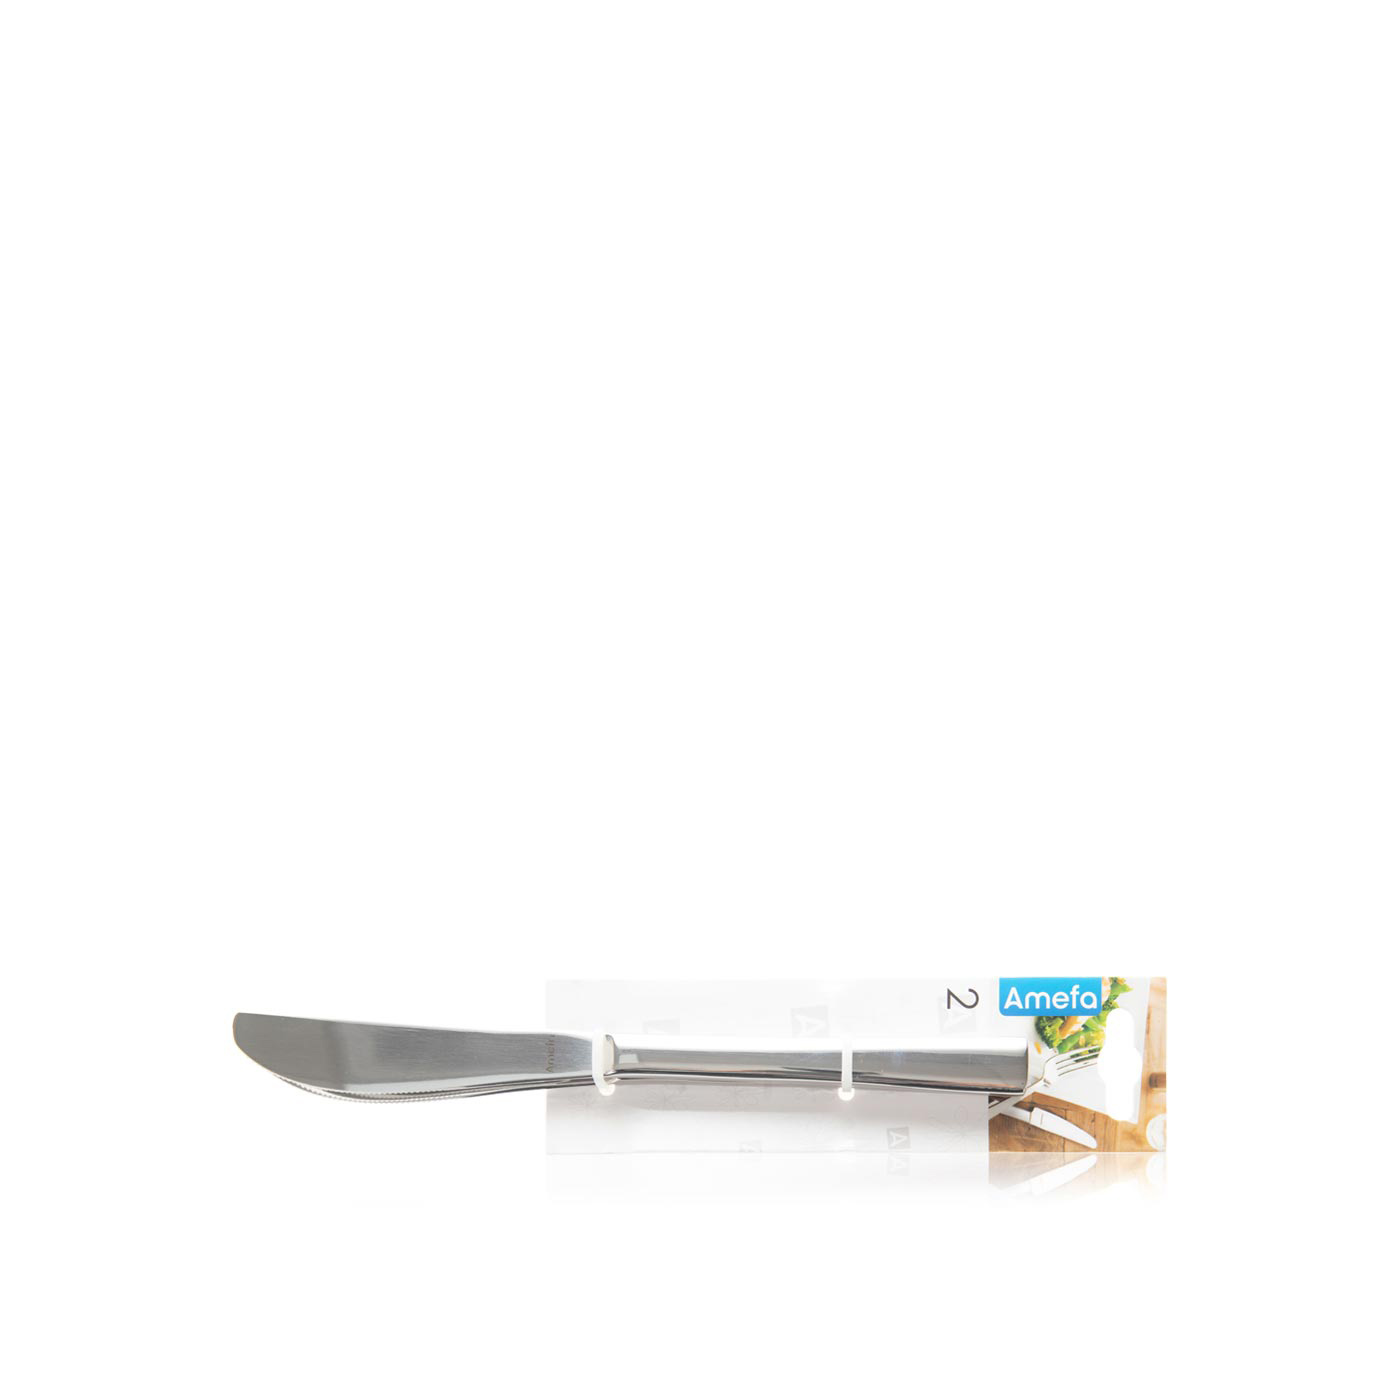 Amefa neptune table knives 2 piece - Spinneys